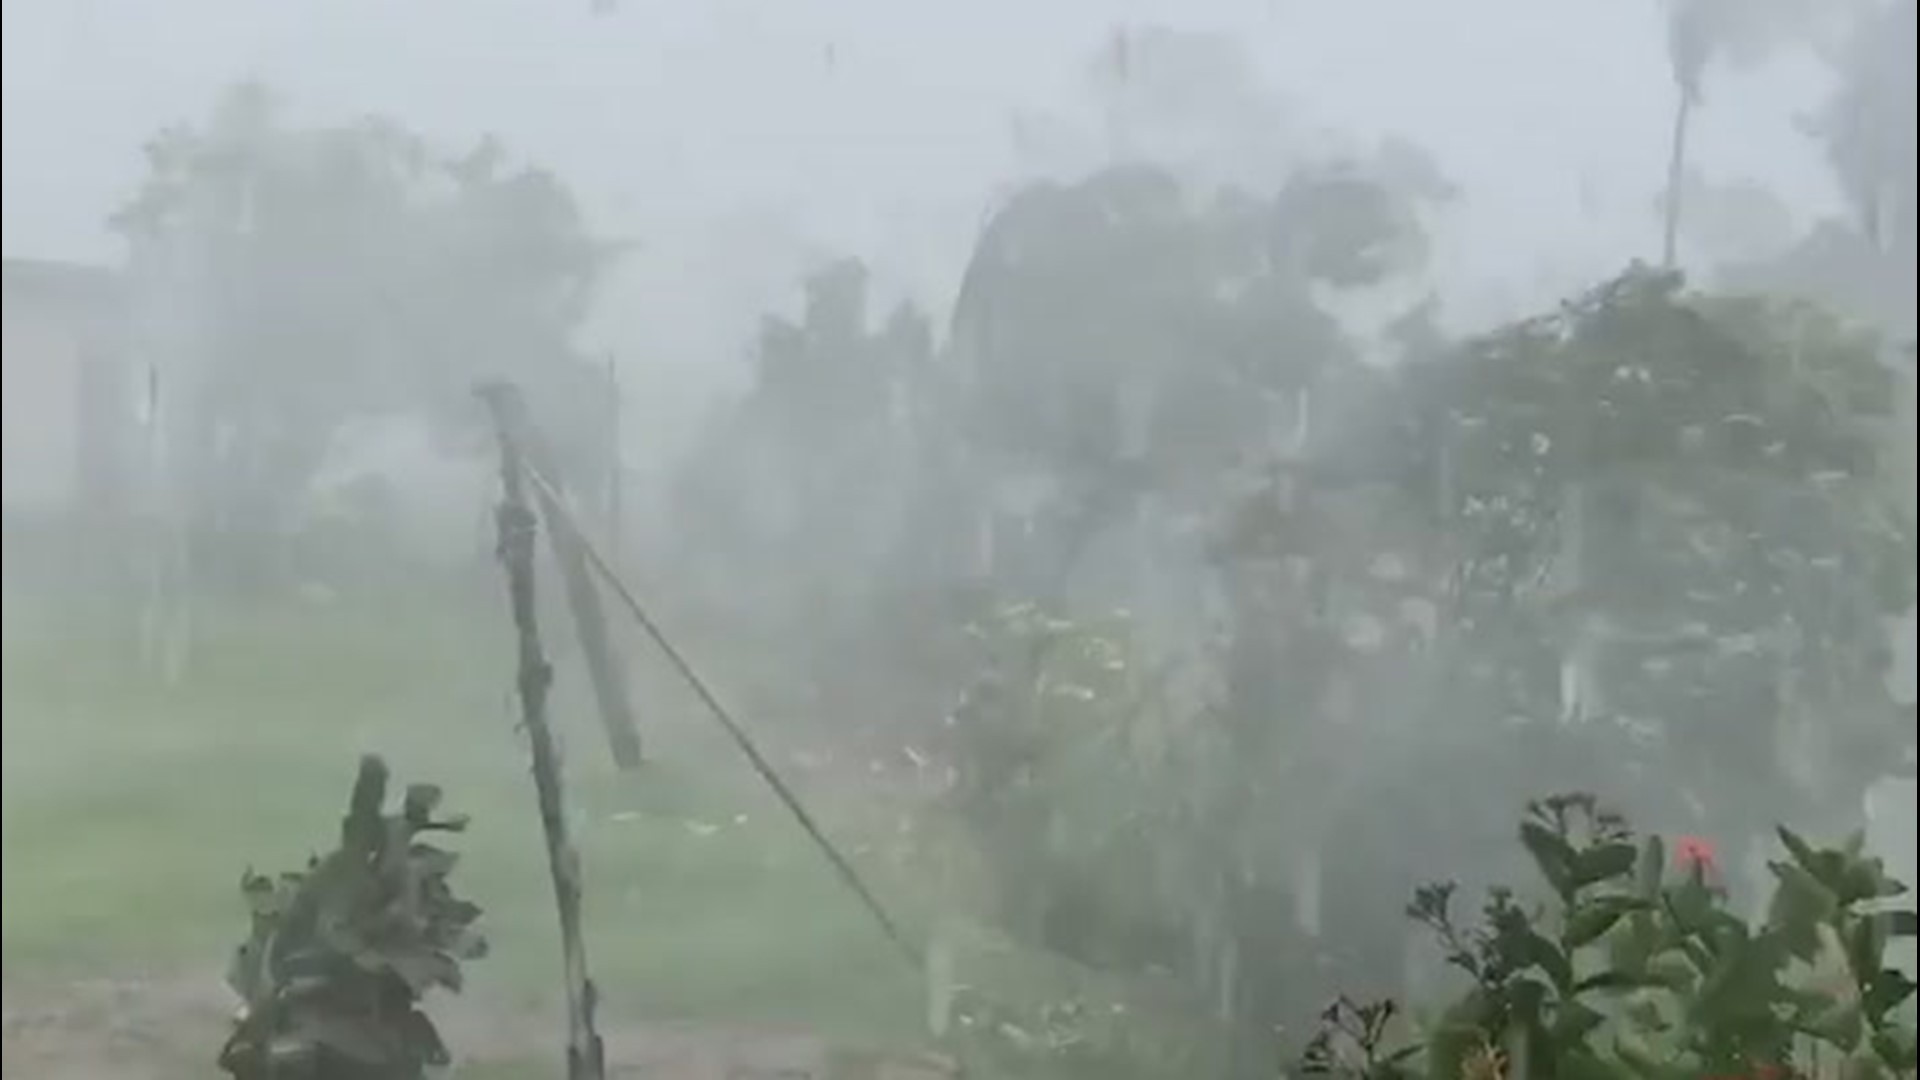 Cyclone Harold's powerful wind and heavy rain blasted Fiji as it made landfall on April 7.